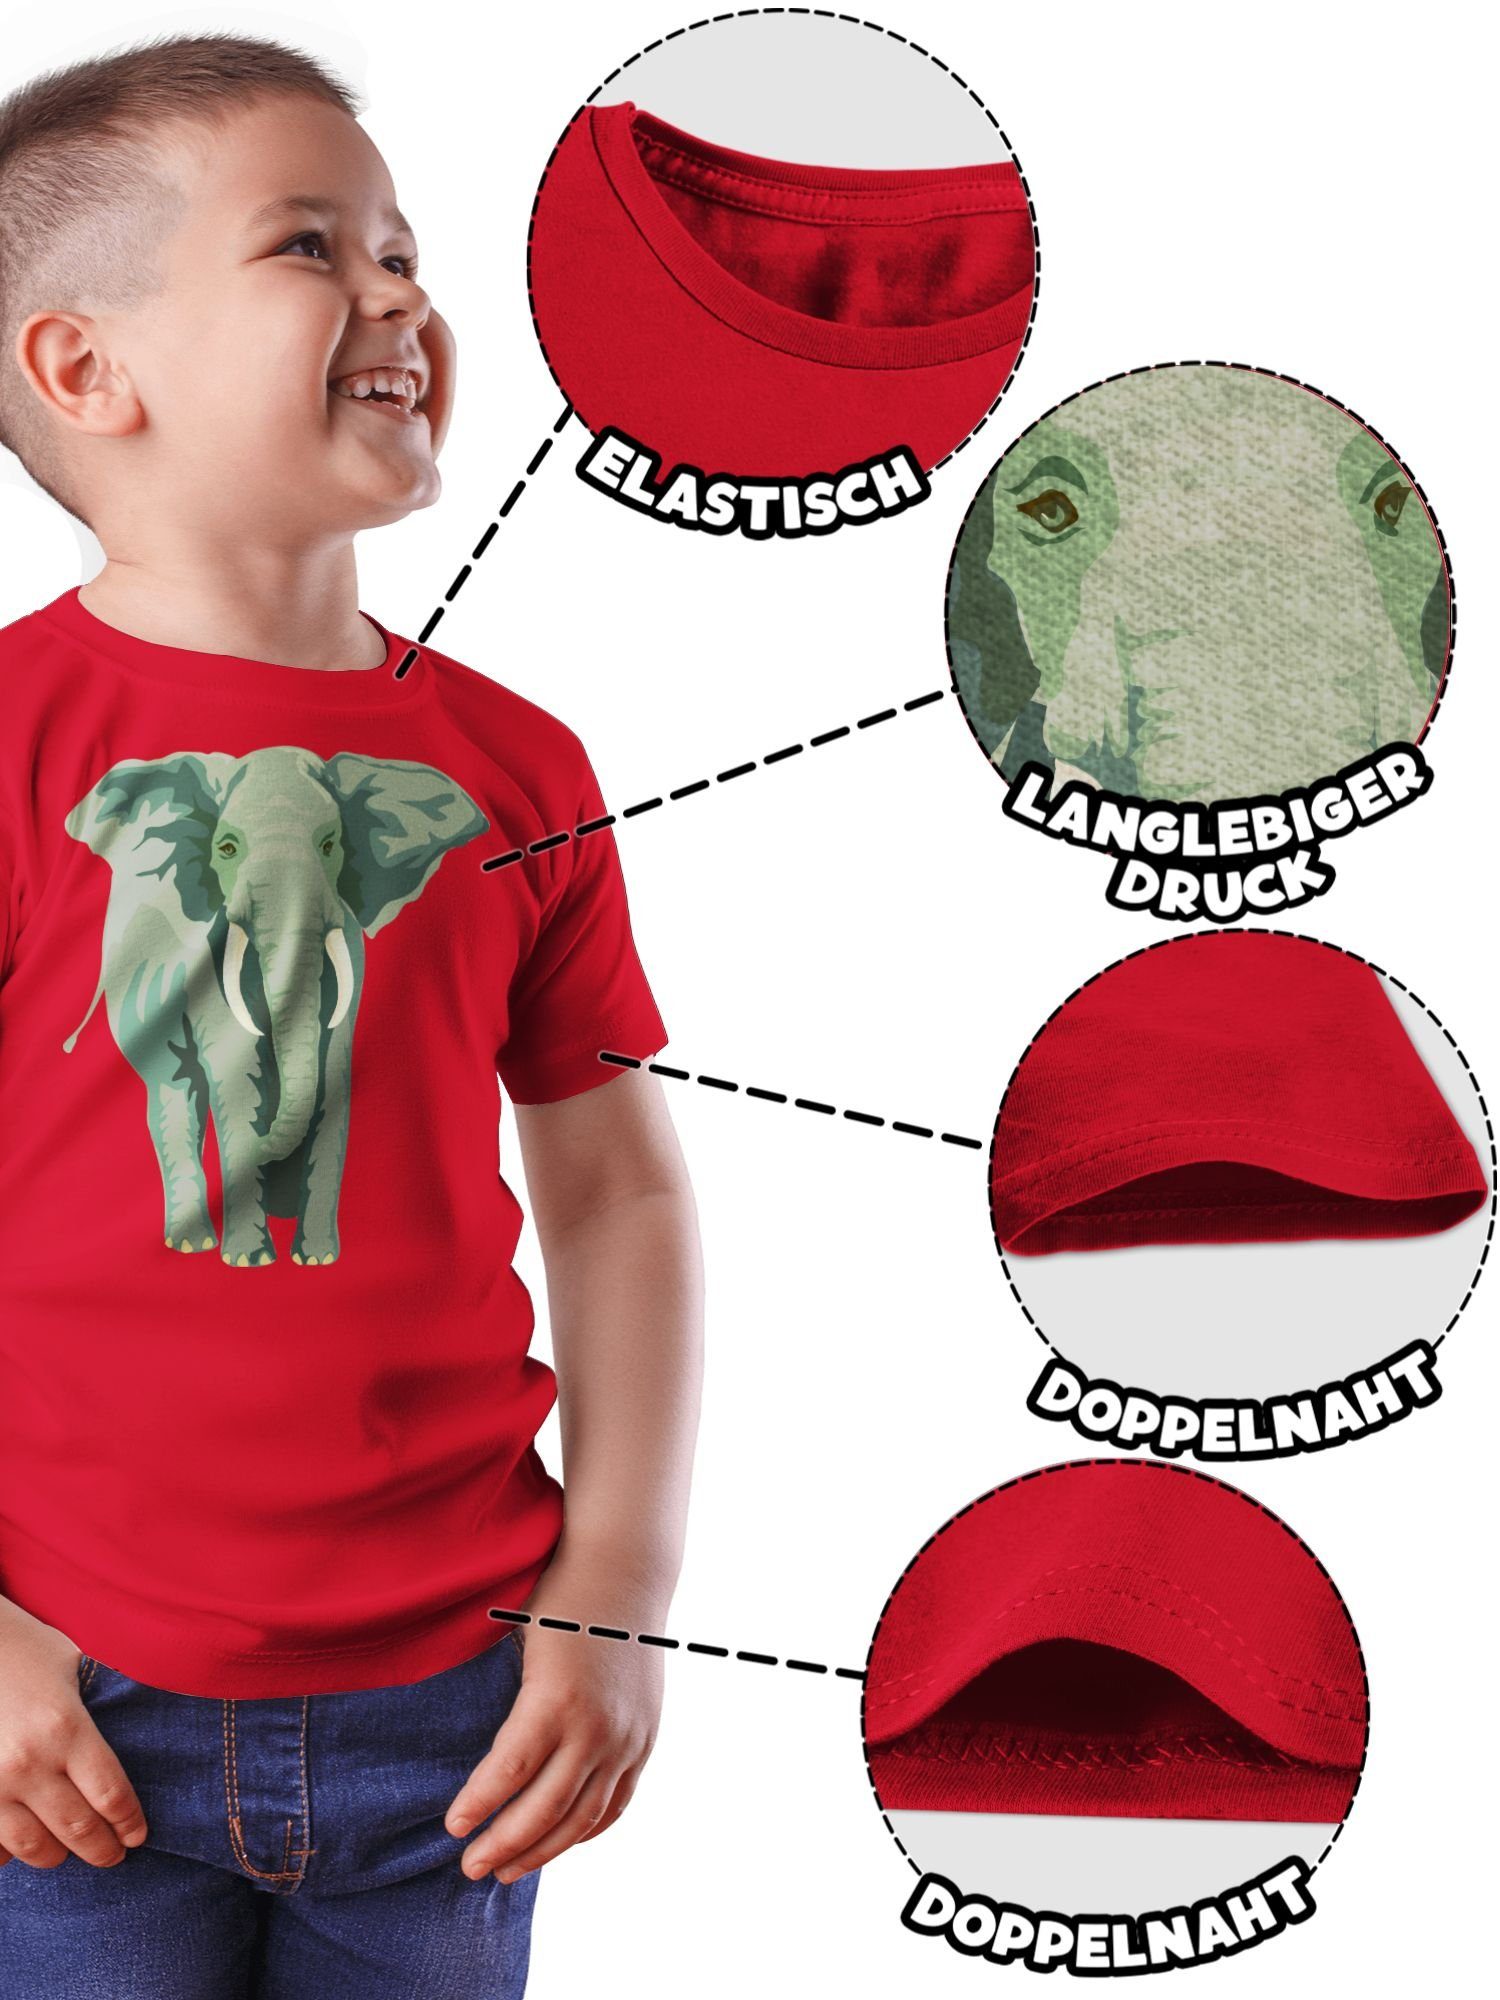 Rot Print 3 T-Shirt Elefant Tiermotiv Animal Shirtracer